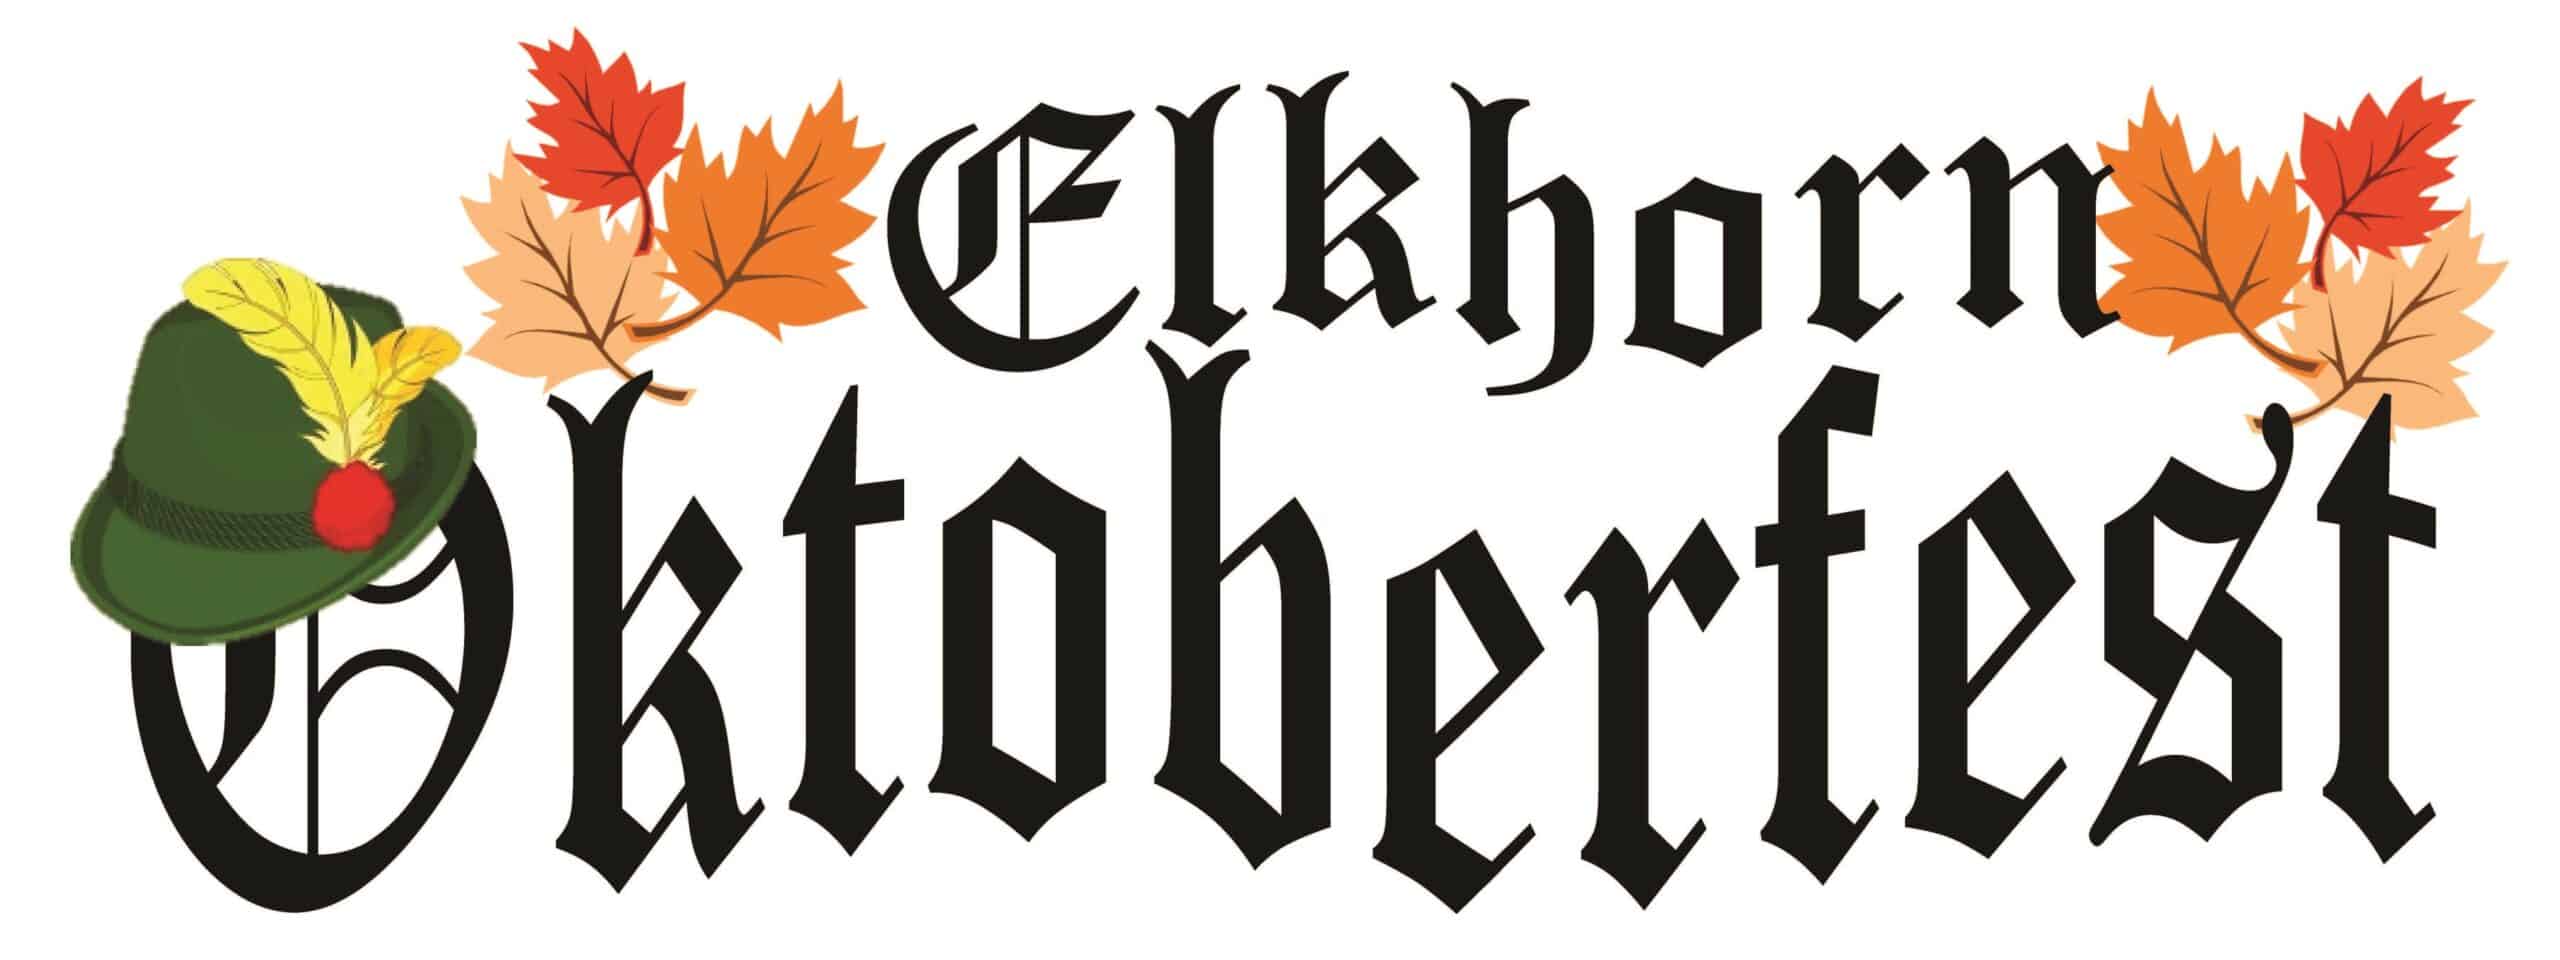 Elkhorn Oktoberfest - WALCO Event